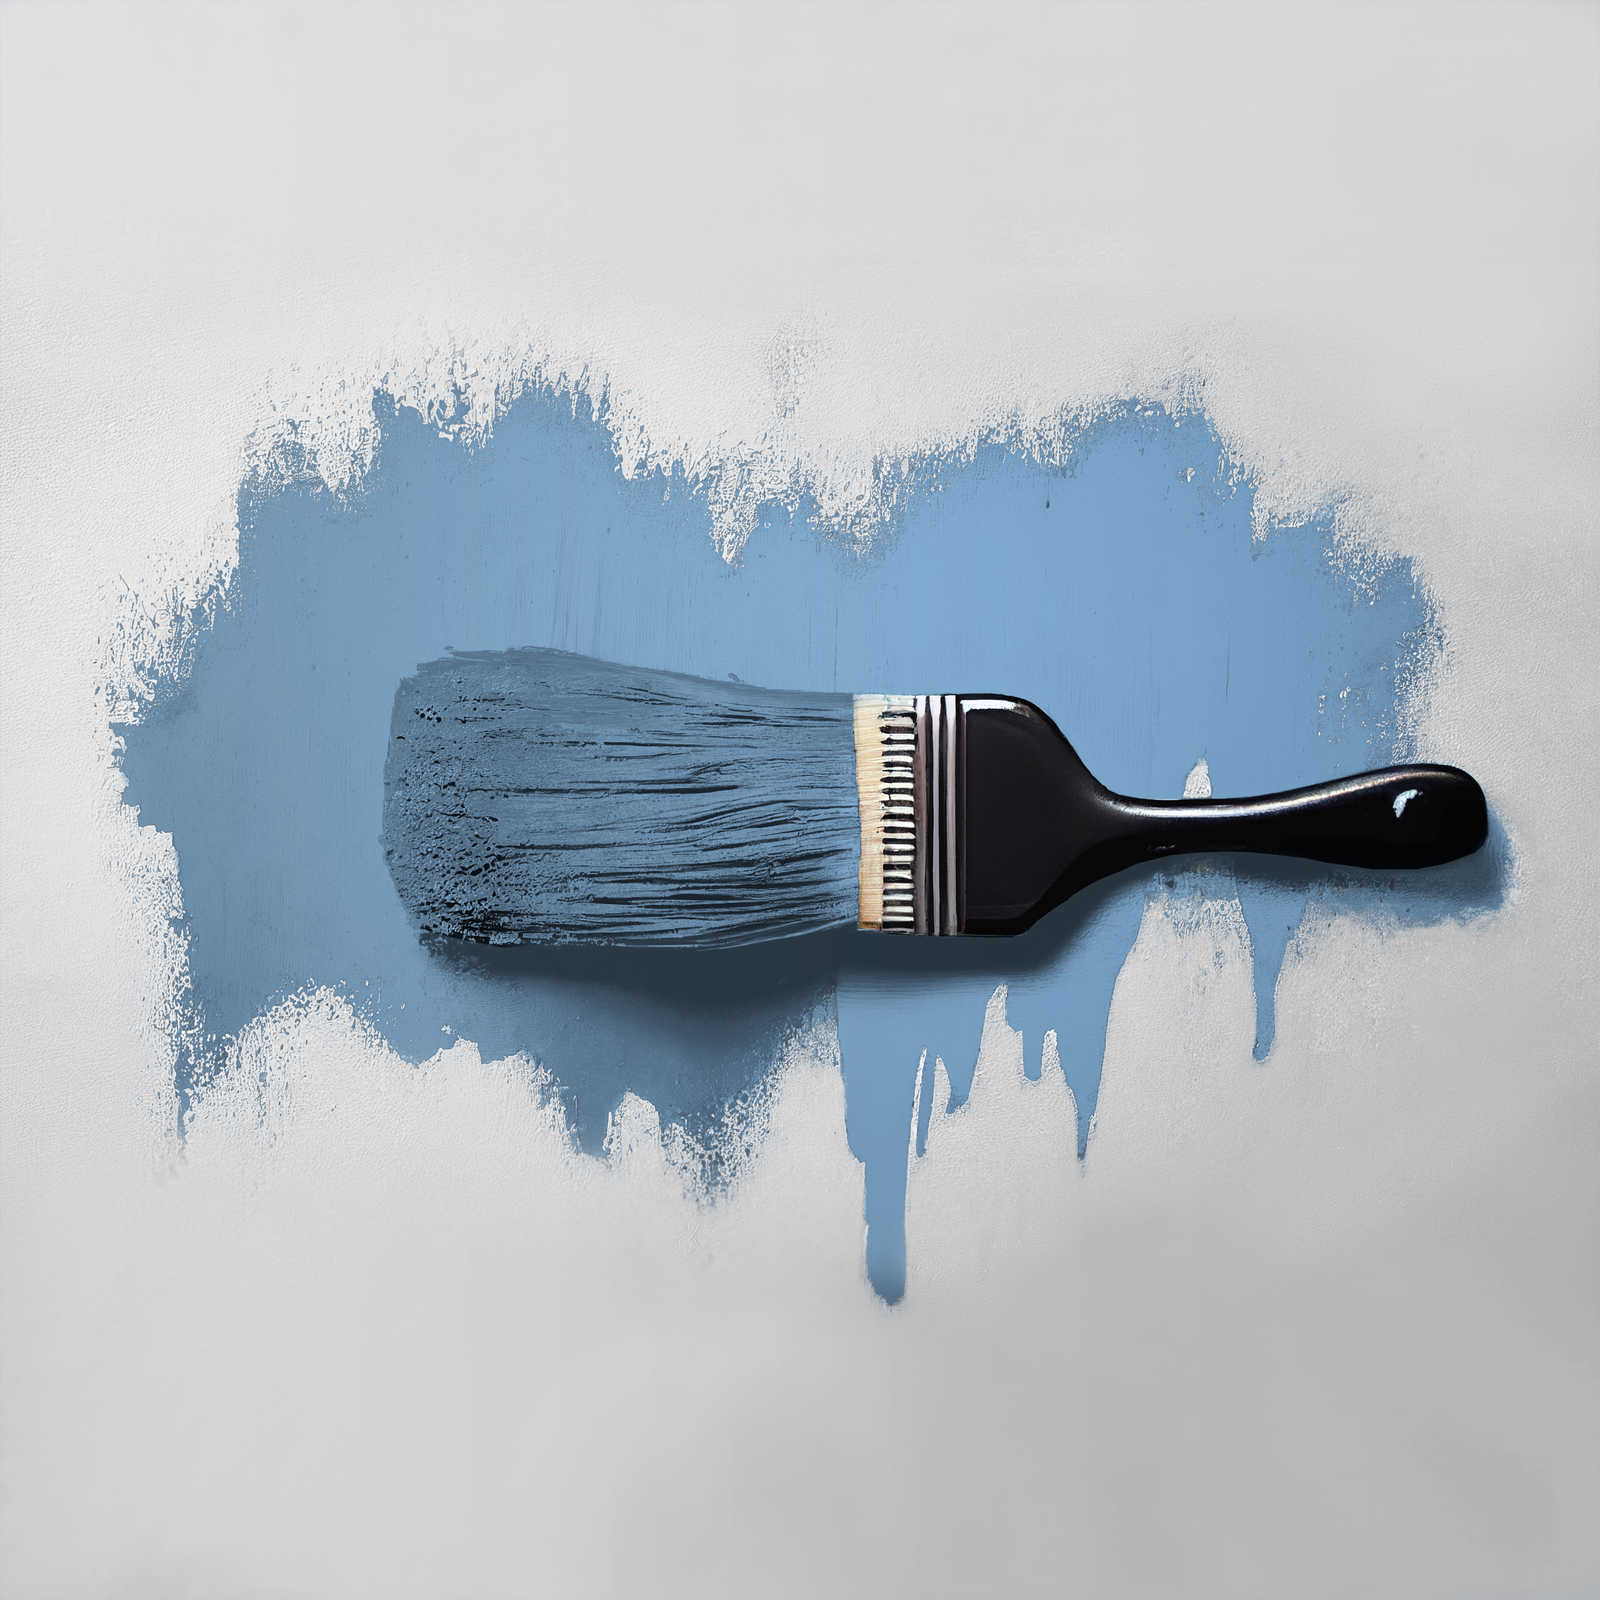             Wandfarbe in strahlendem Taubenblau »Blue Herring« TCK3004 – 2,5 Liter
        